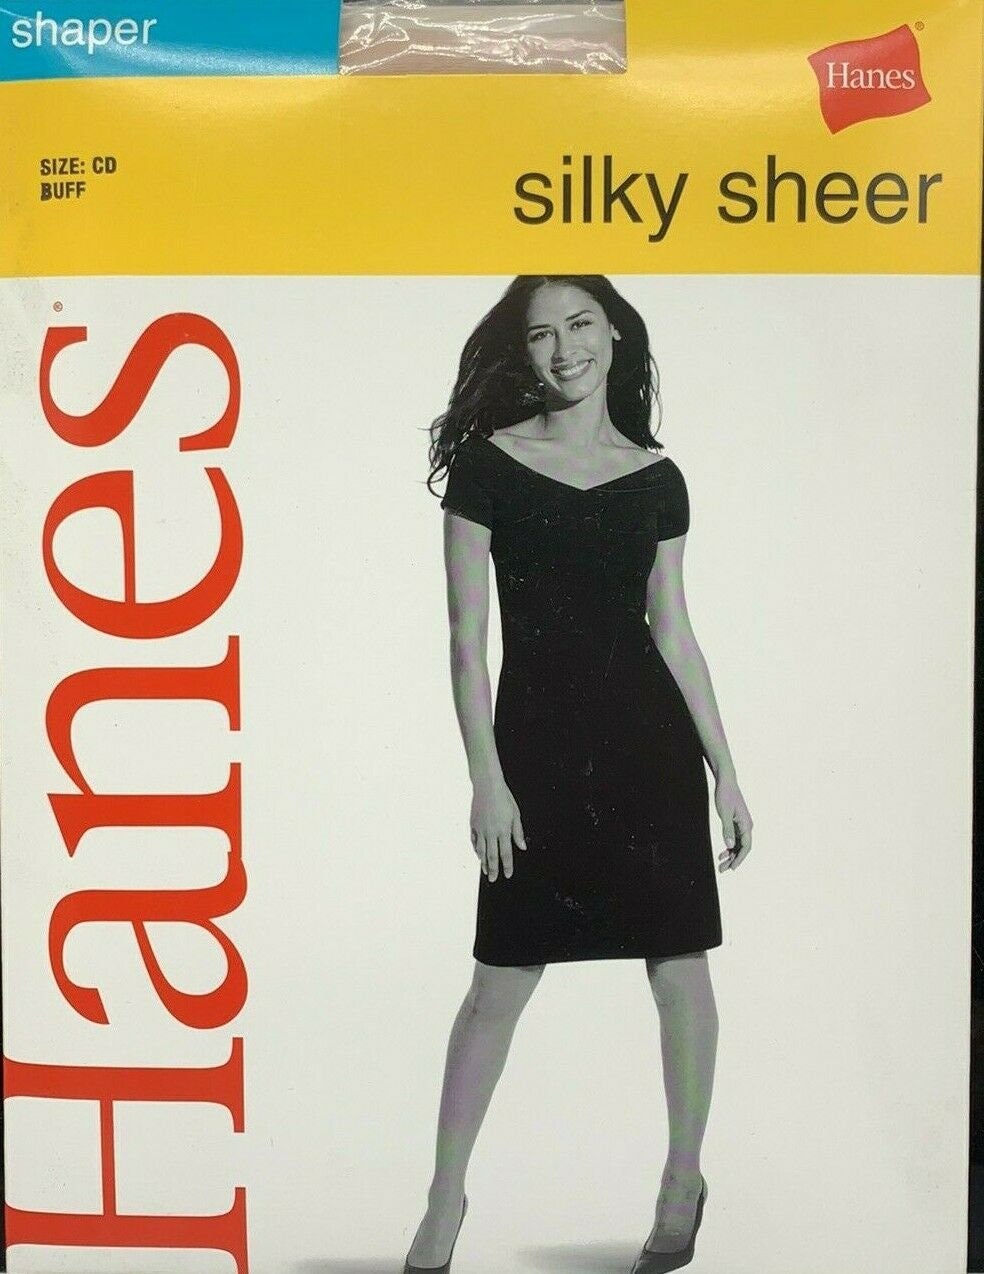 Hanes Silky Sheer Luxurious, Silky Body Shaper, Size CD, Buff 